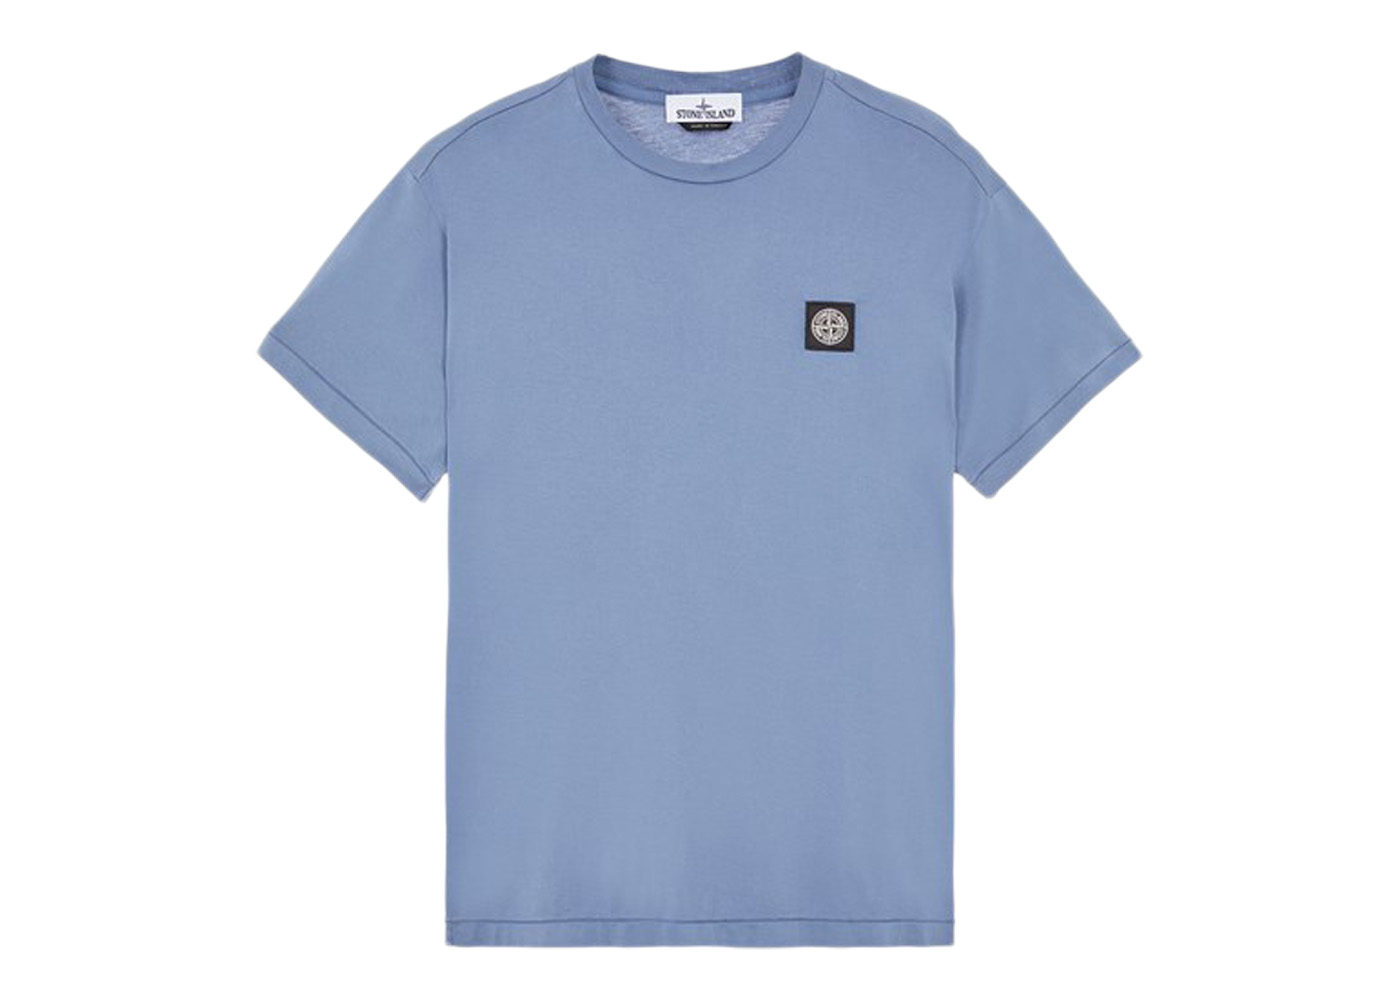 Stone Island 24113 60/2 Cotton Jersey Garment Dyed T-Shirt Avio Blue